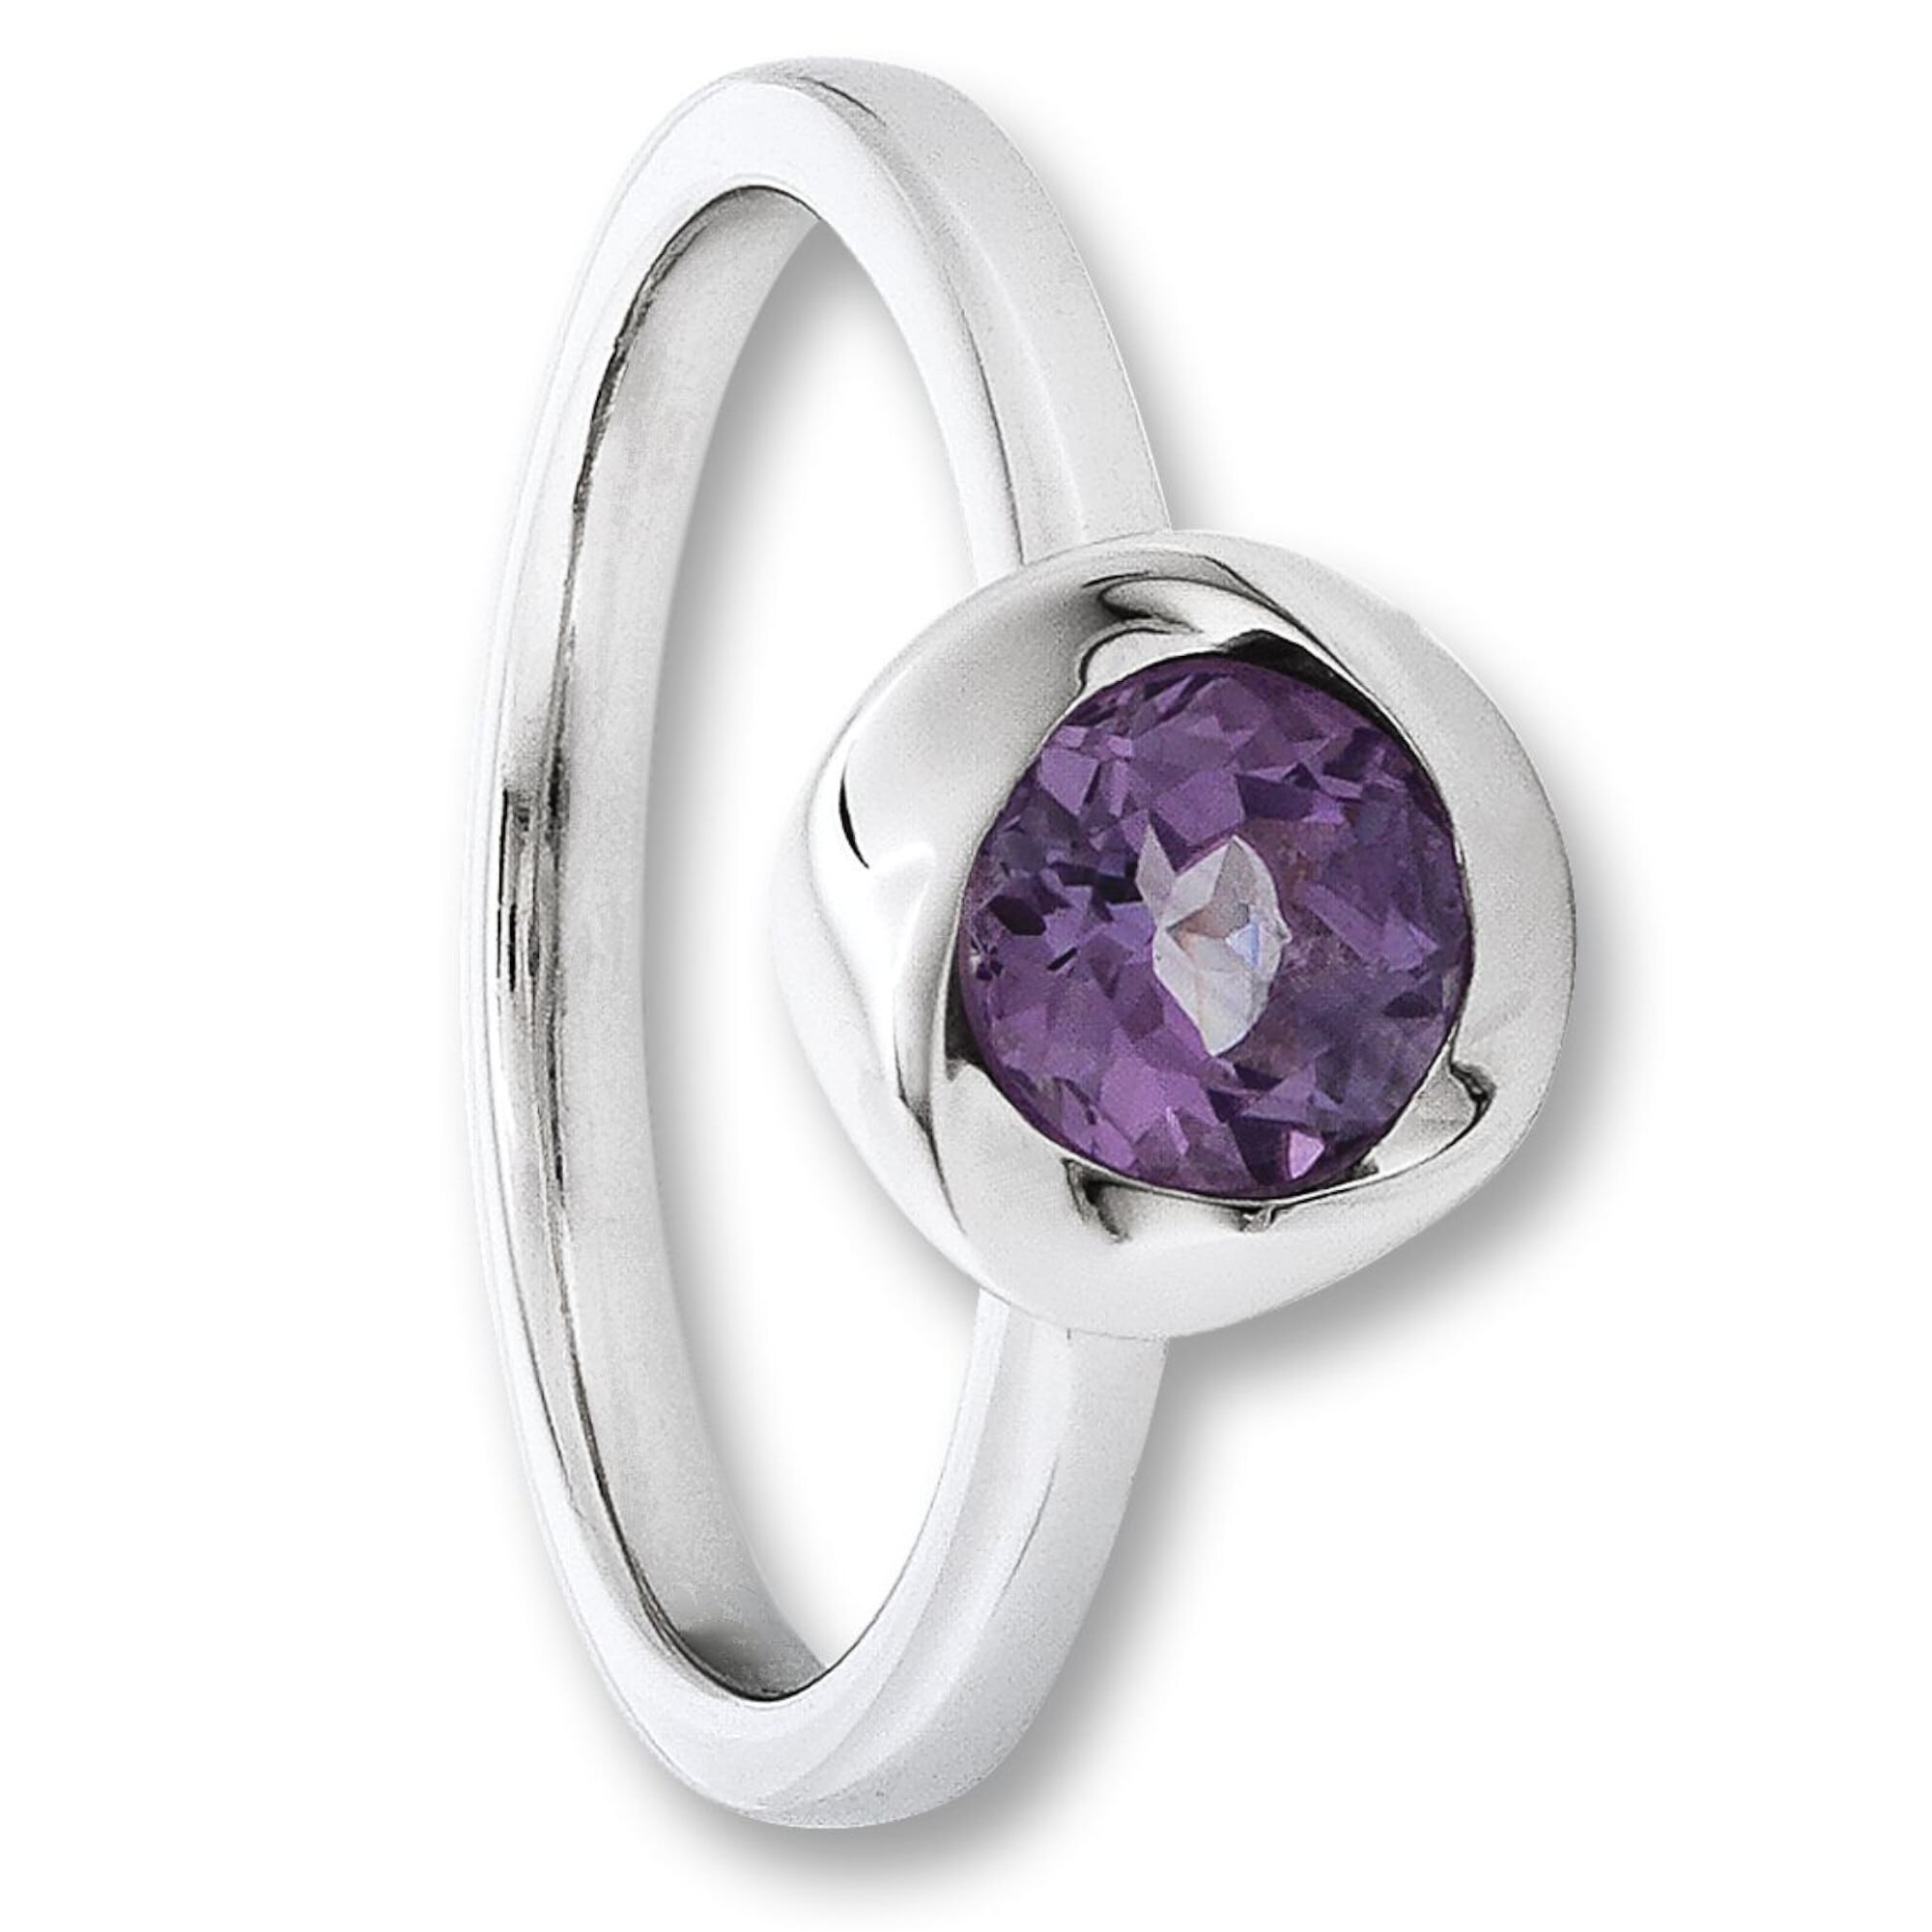 ONE ELEMENT Silberring »Amethyst Ring aus 925 Silber«, Damen Silber Schmuck